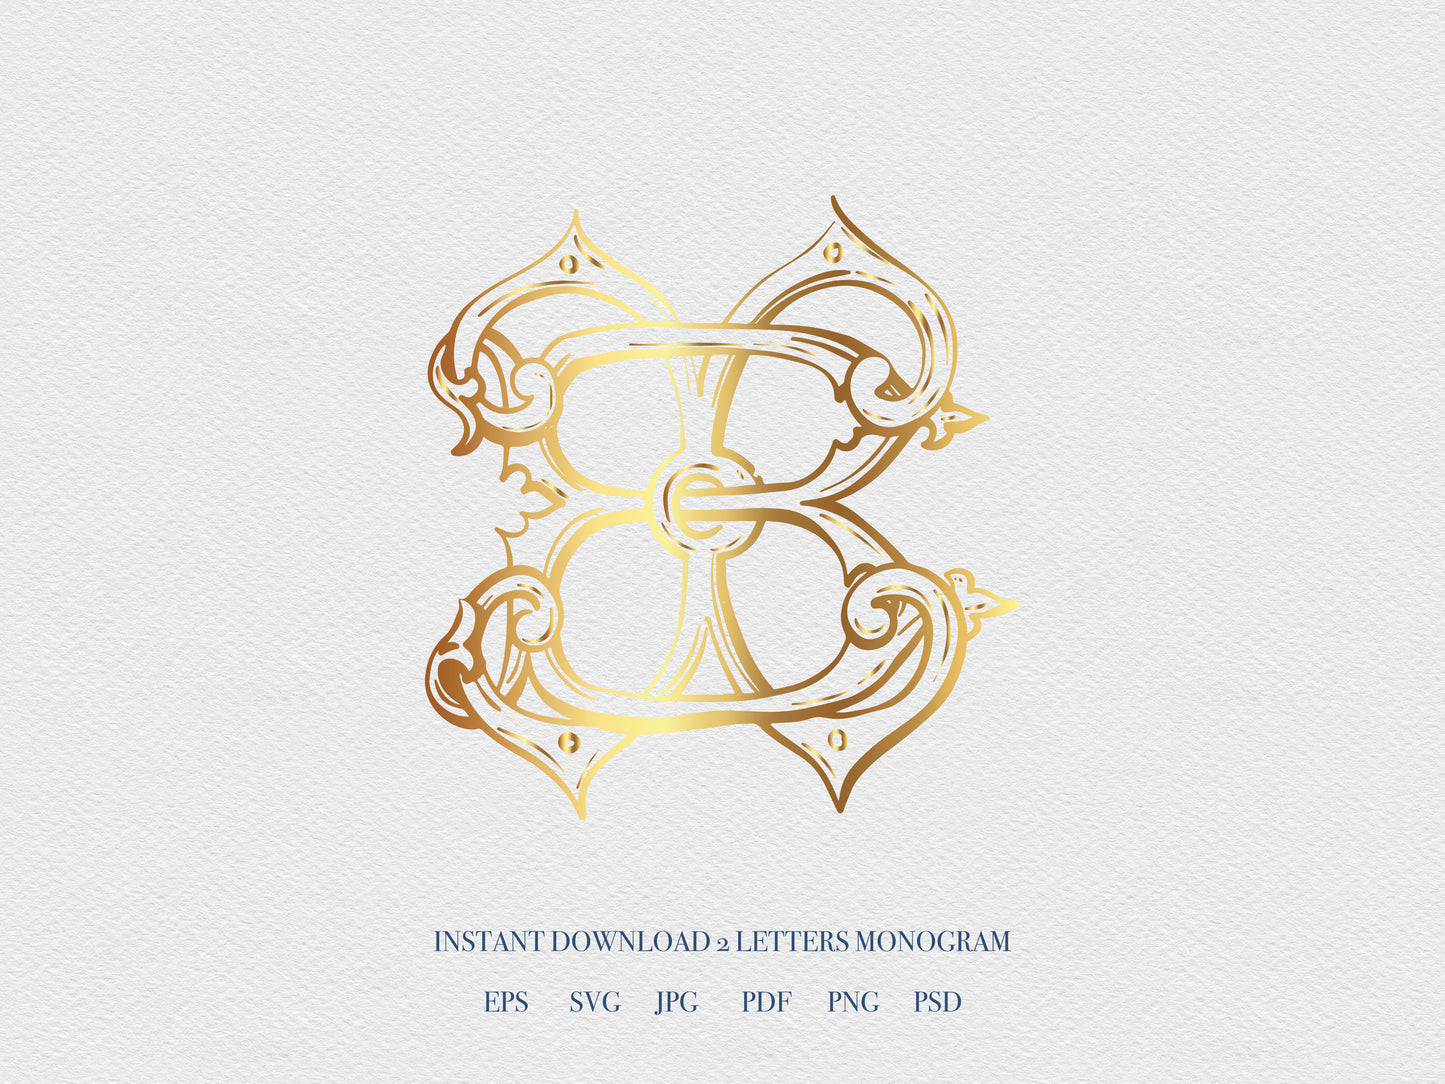 2 Letter Monogram with Letters BX XB | Digital Download - Wedding Monogram SVG, Personal Logo, Wedding Logo for Wedding Invitations